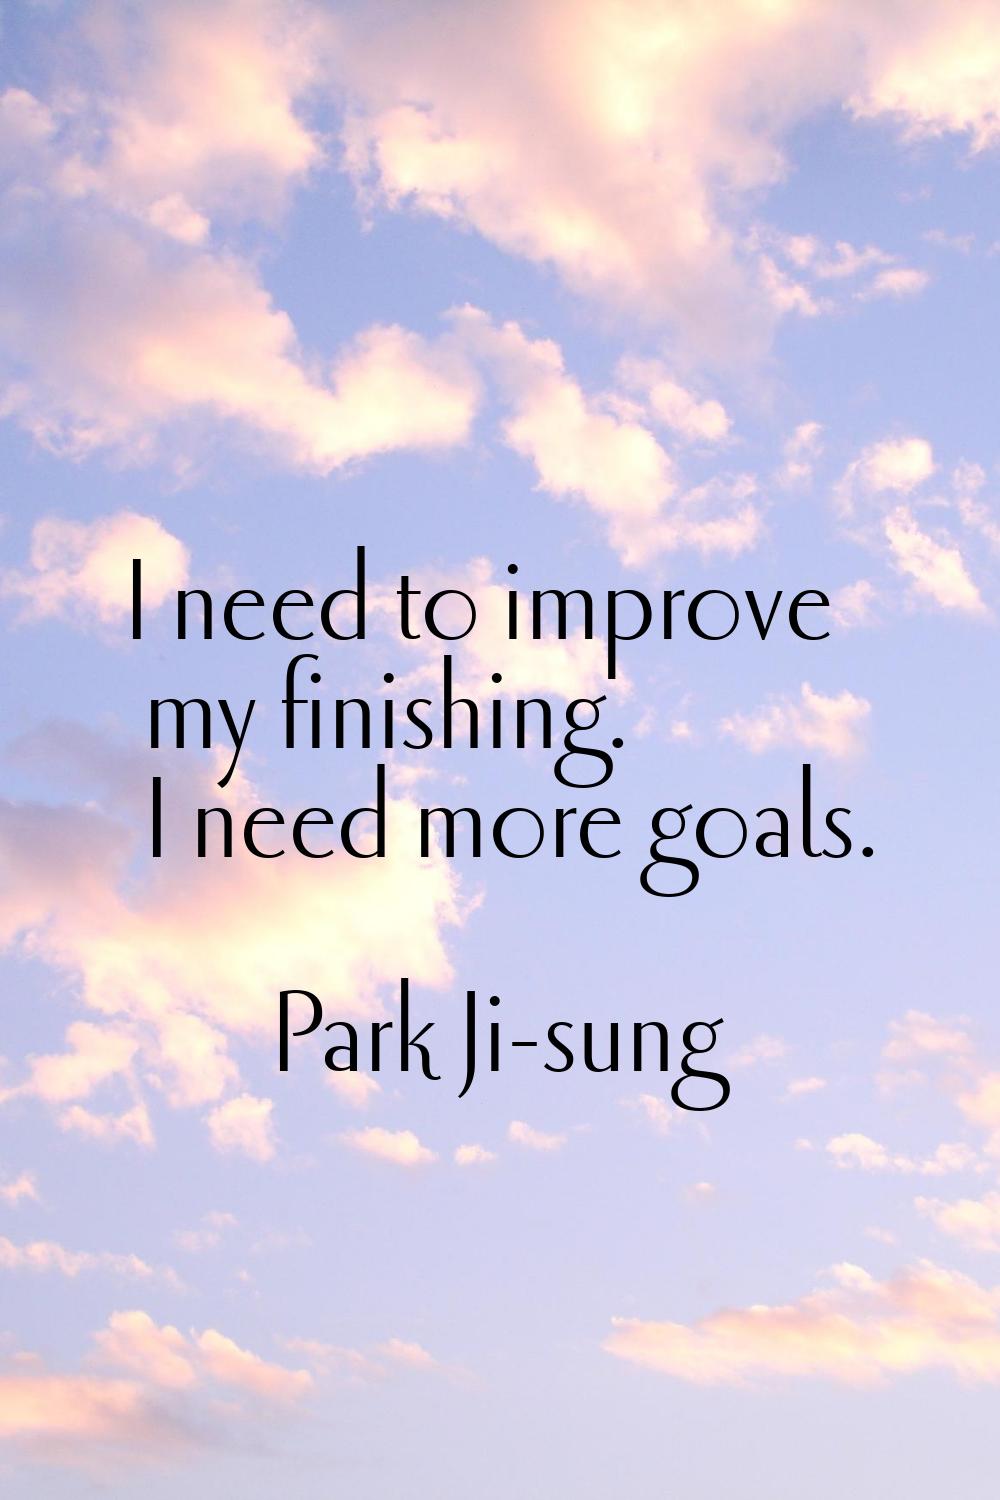 I need to improve my finishing. I need more goals.